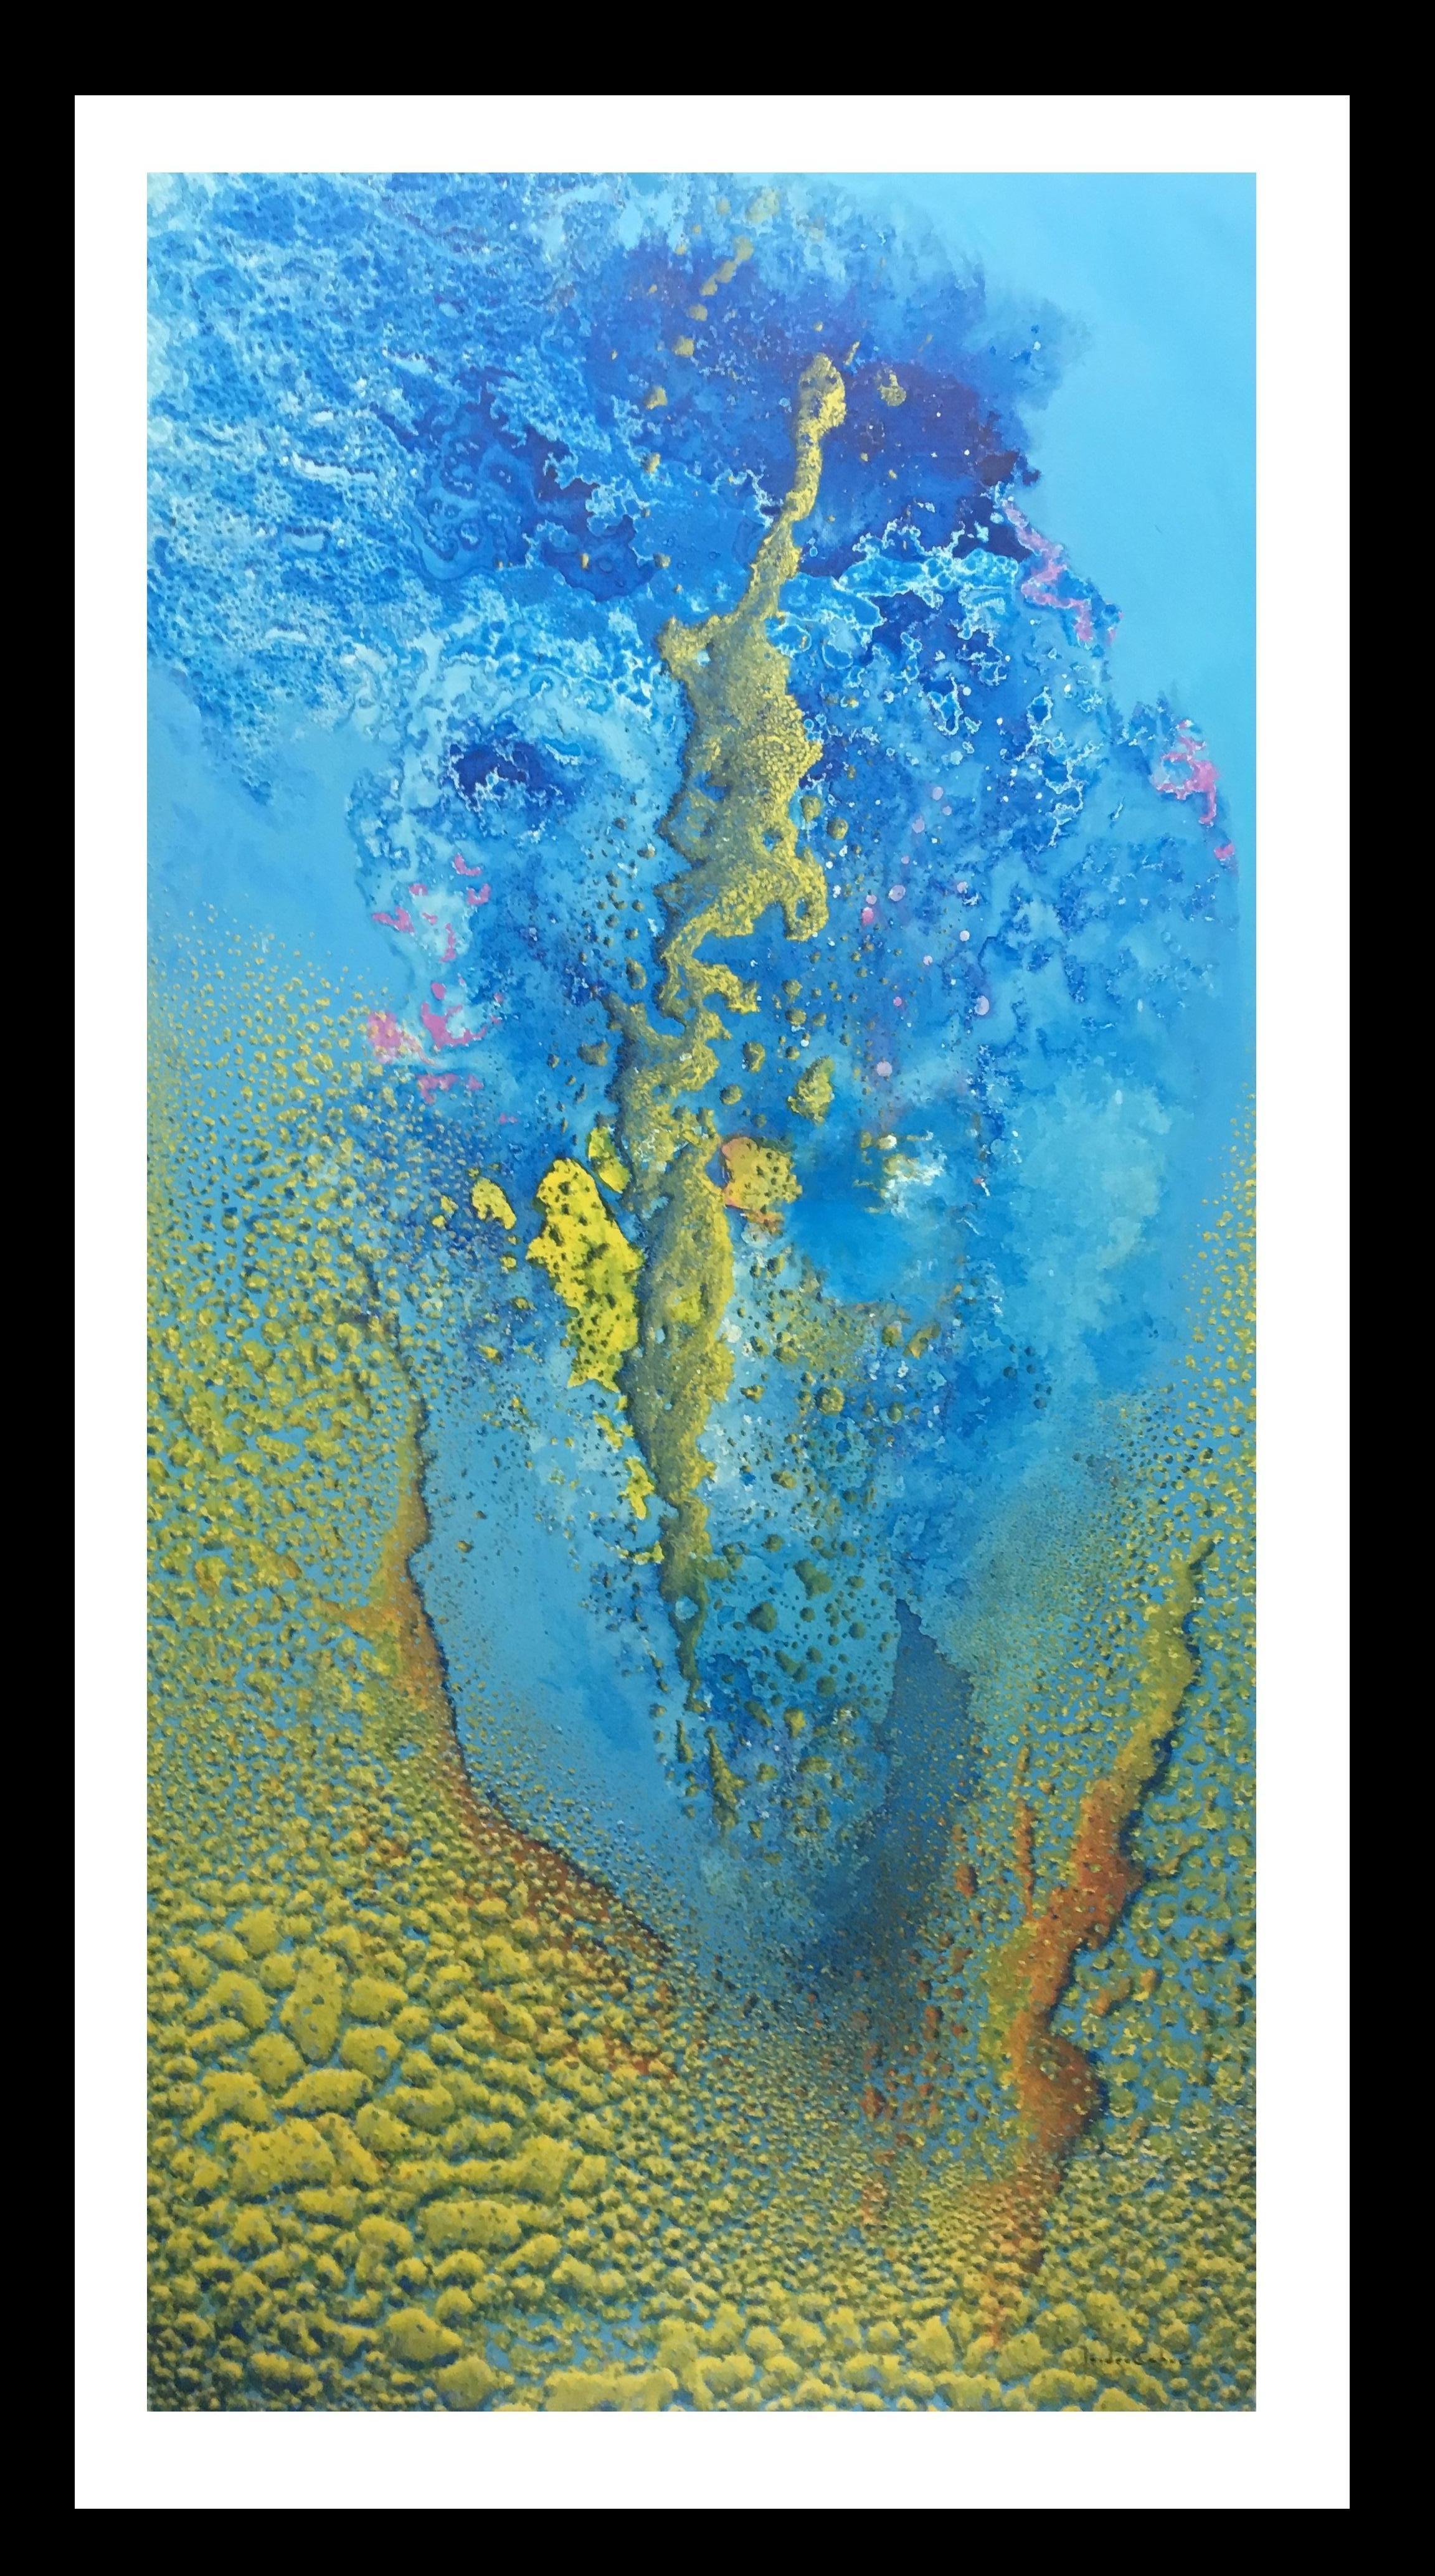 Abstract Painting Isidro Cahue - I. Cahue 20  bas de la mer, écailles, bleu jaune, abstrait